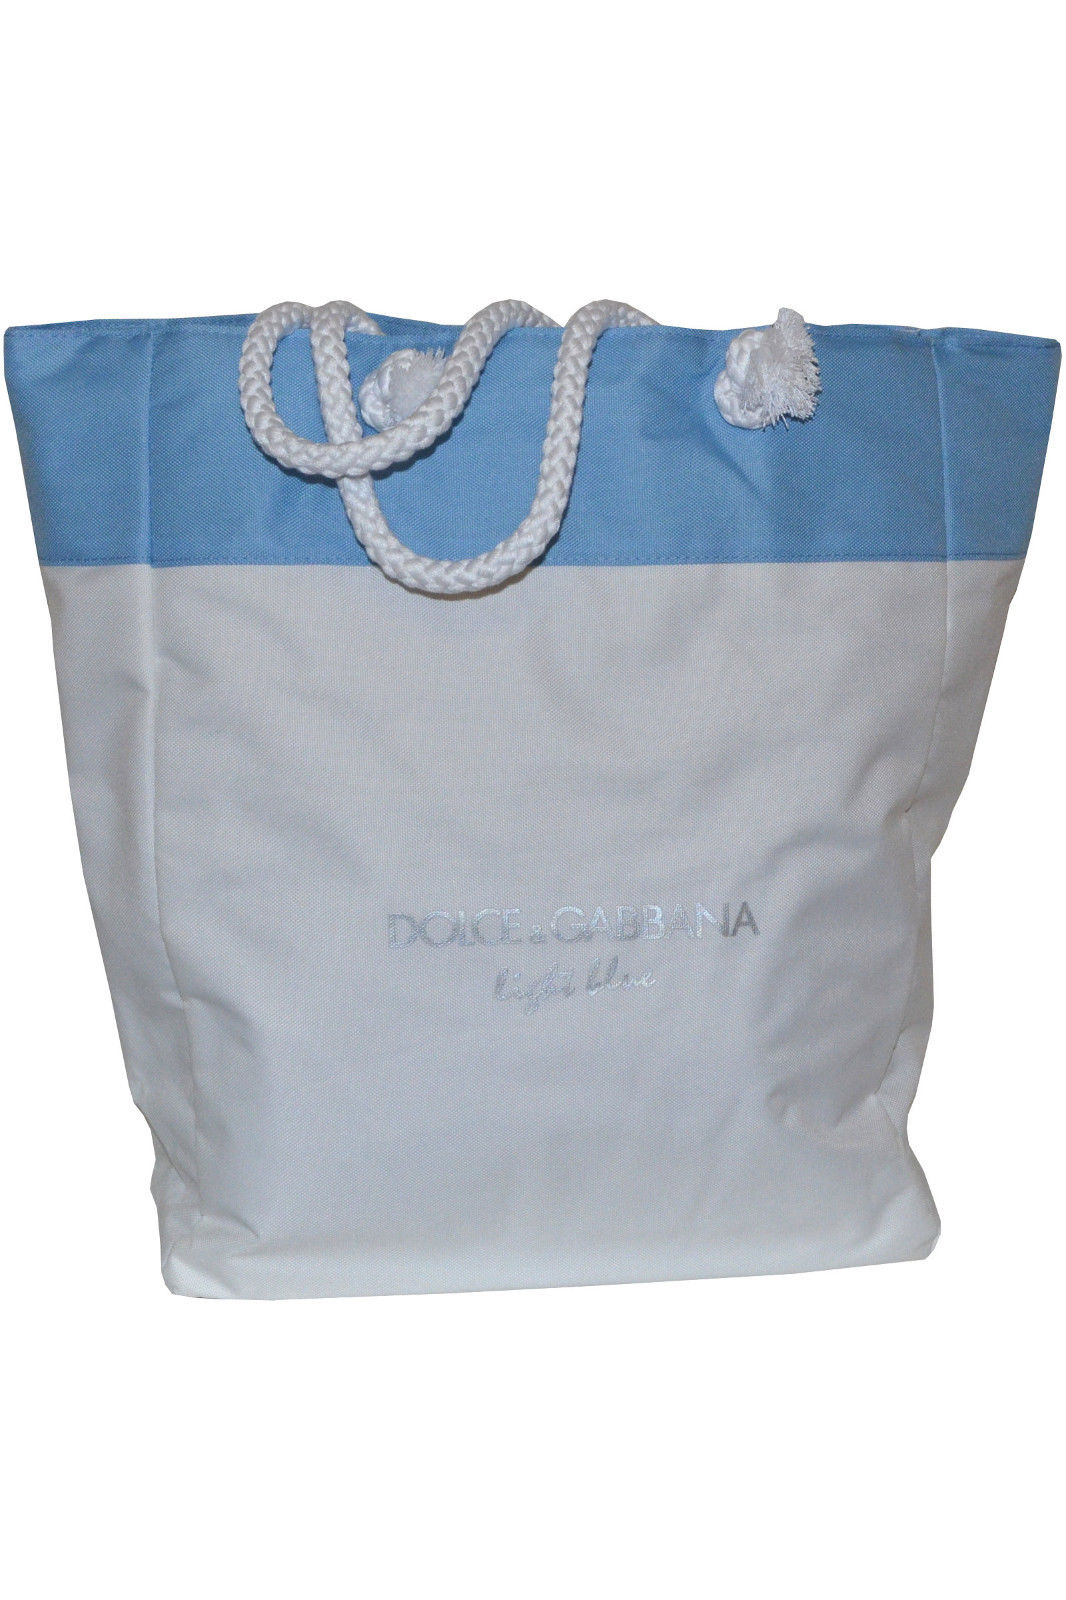 dolce and gabbana light blue bag